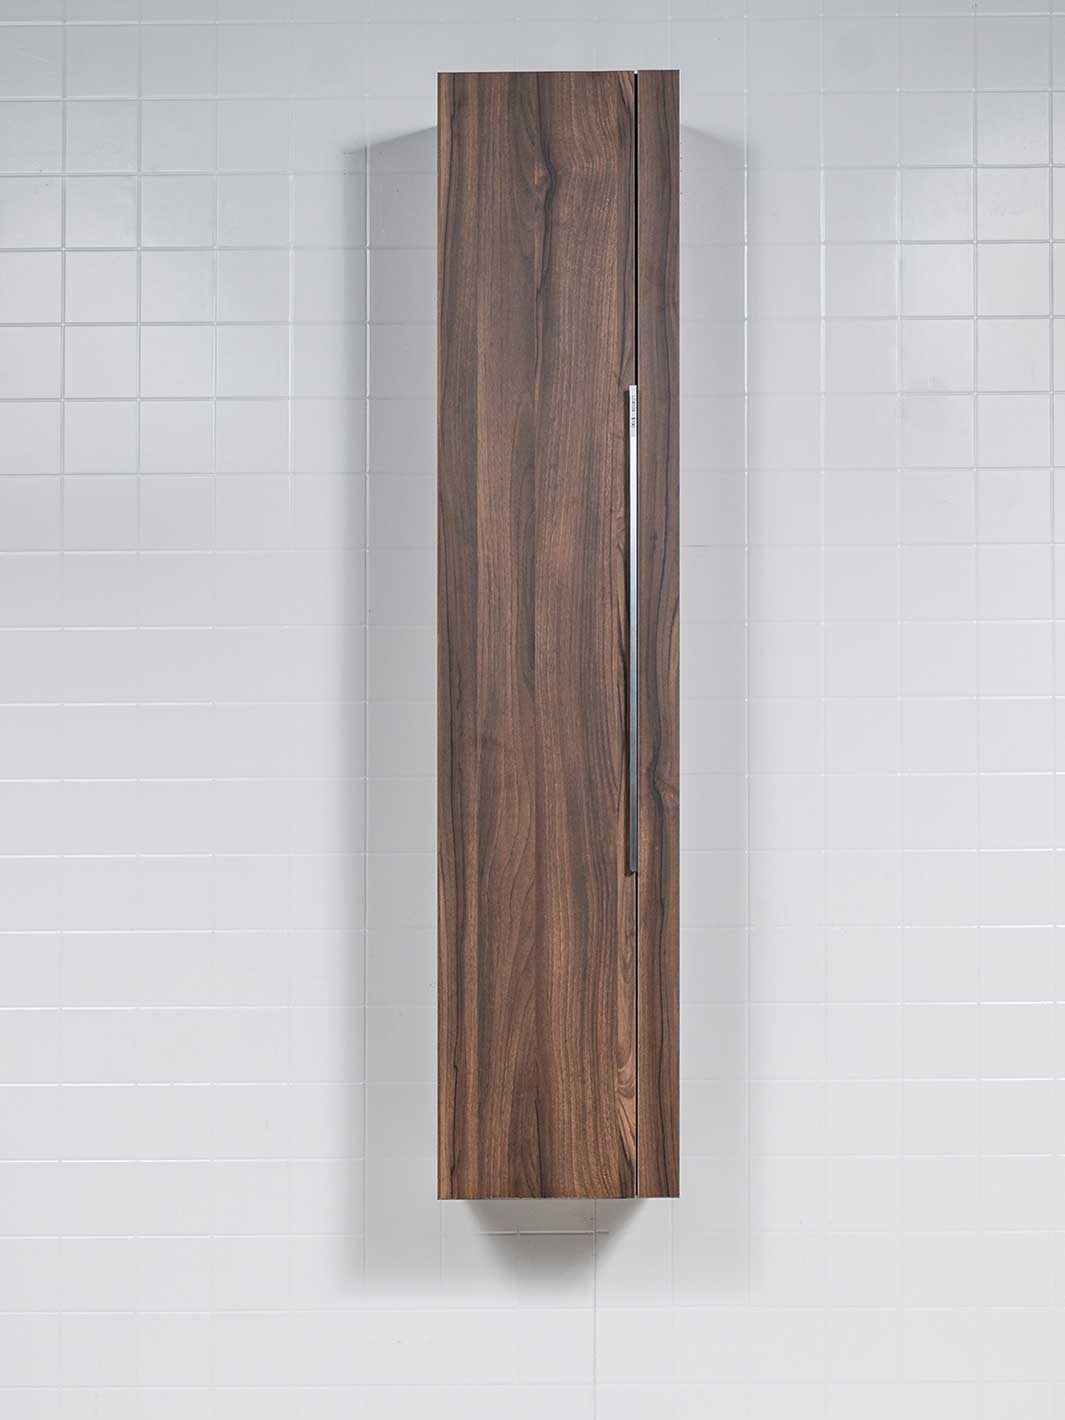 bathroom wall cabinet in walnut wood grain finish